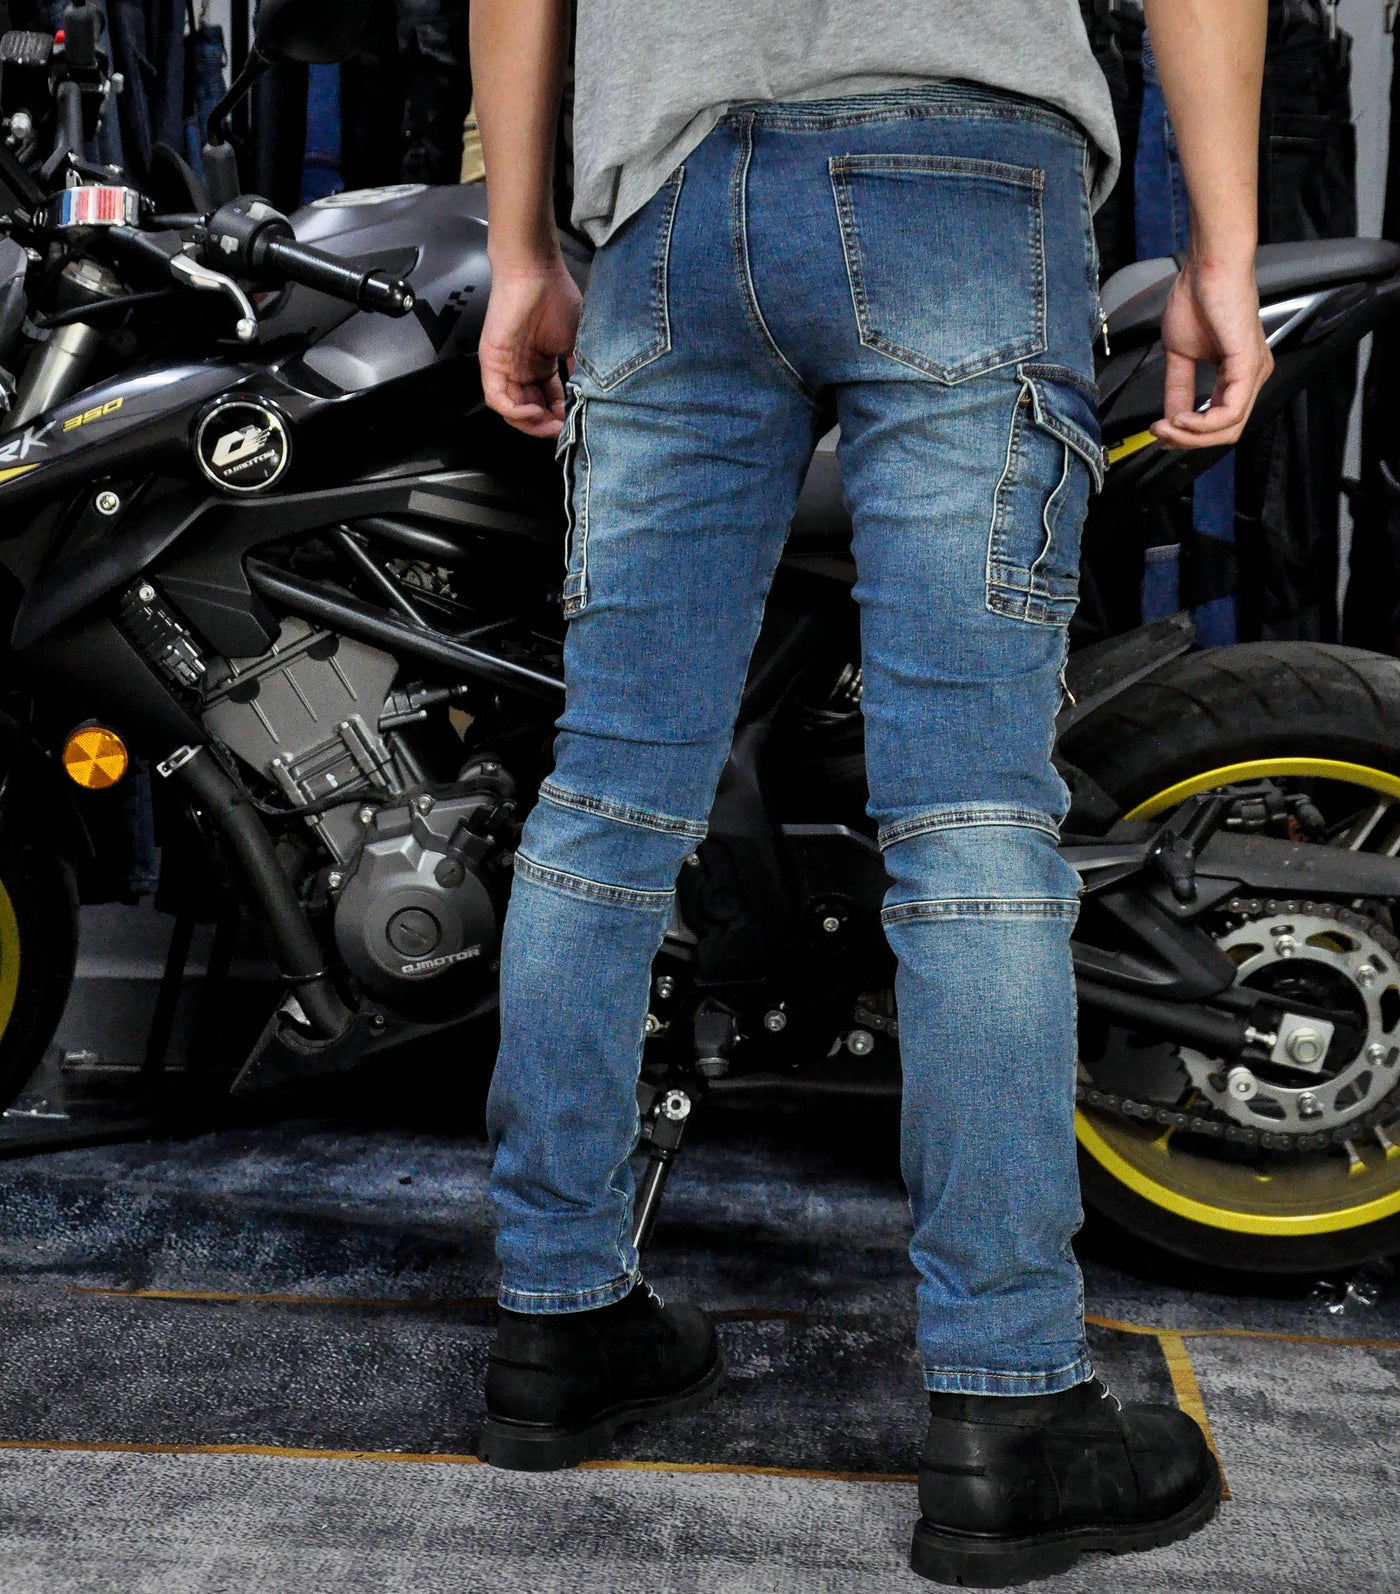 Apex 24 Men's Motorcycle Riding Jeans